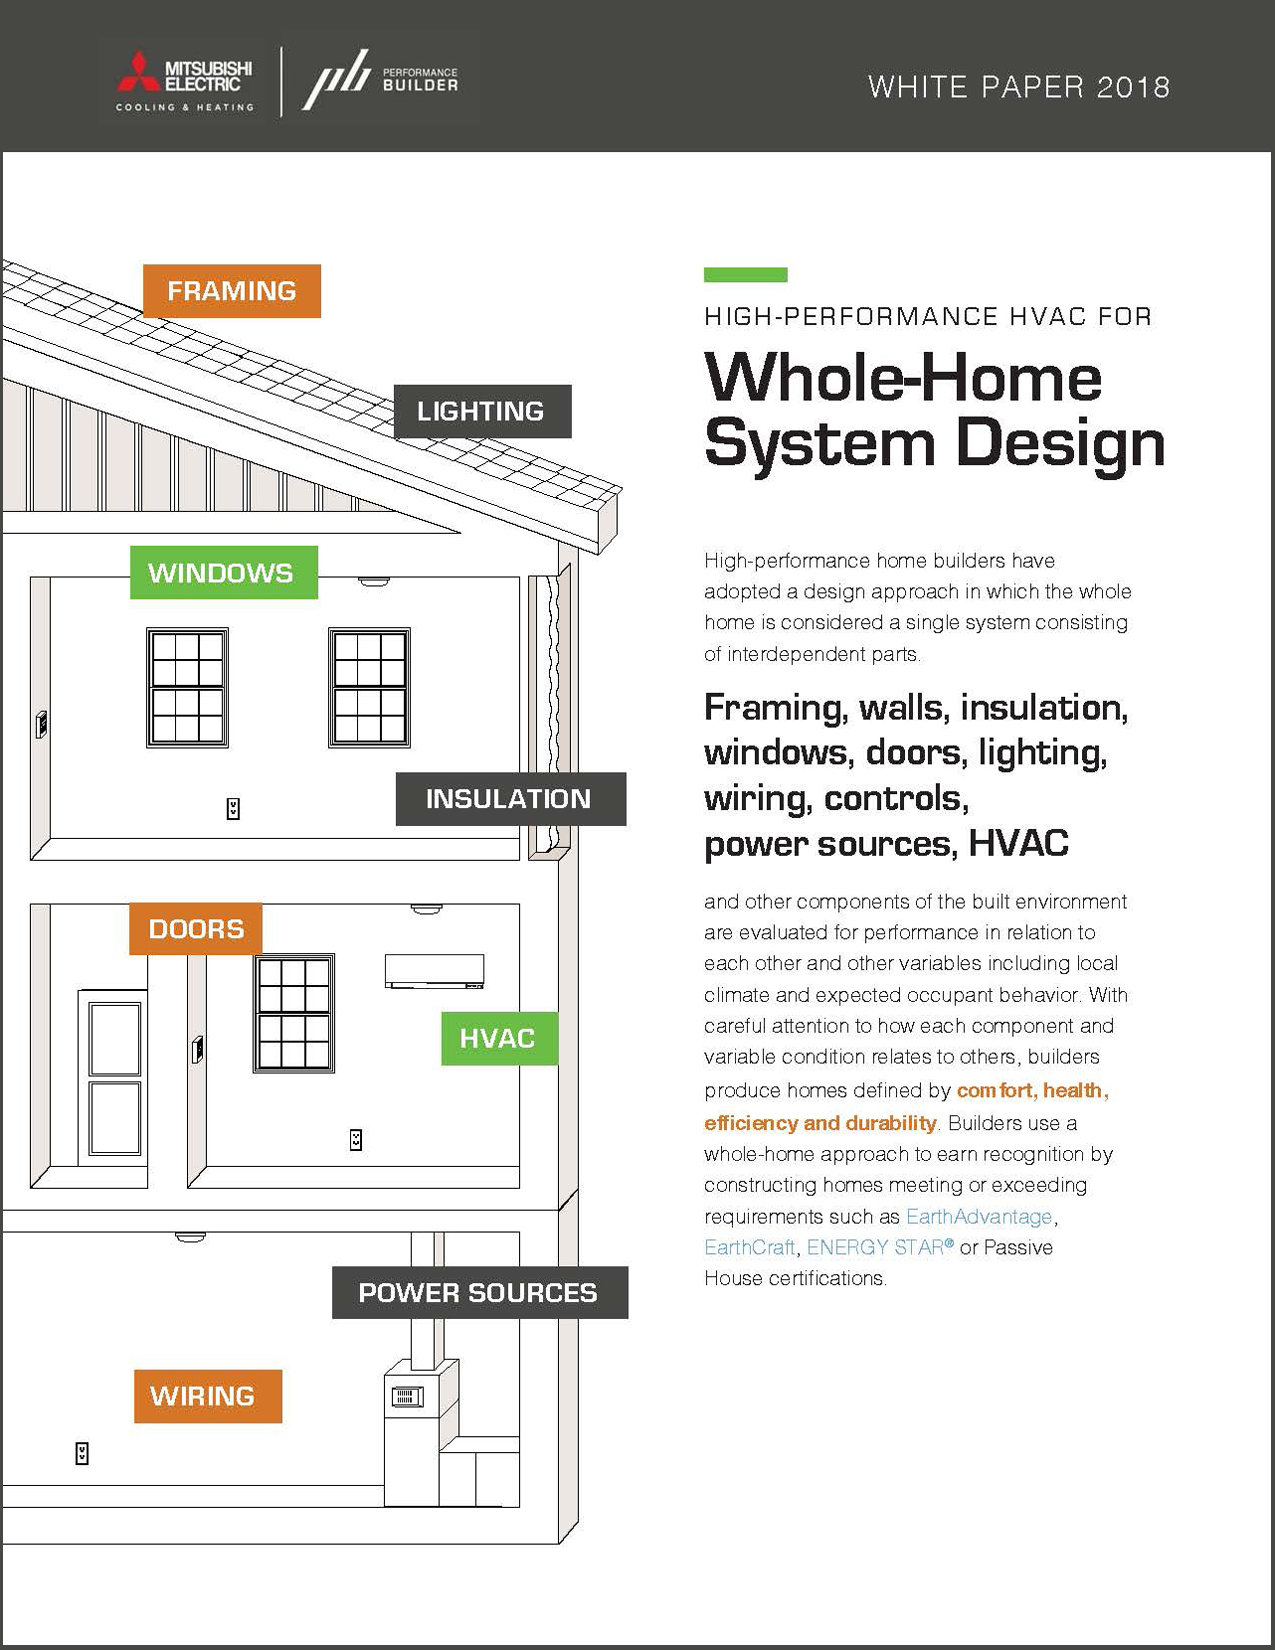 Whole-HOme System Design - Mitsubishi Electric White Paper Cover